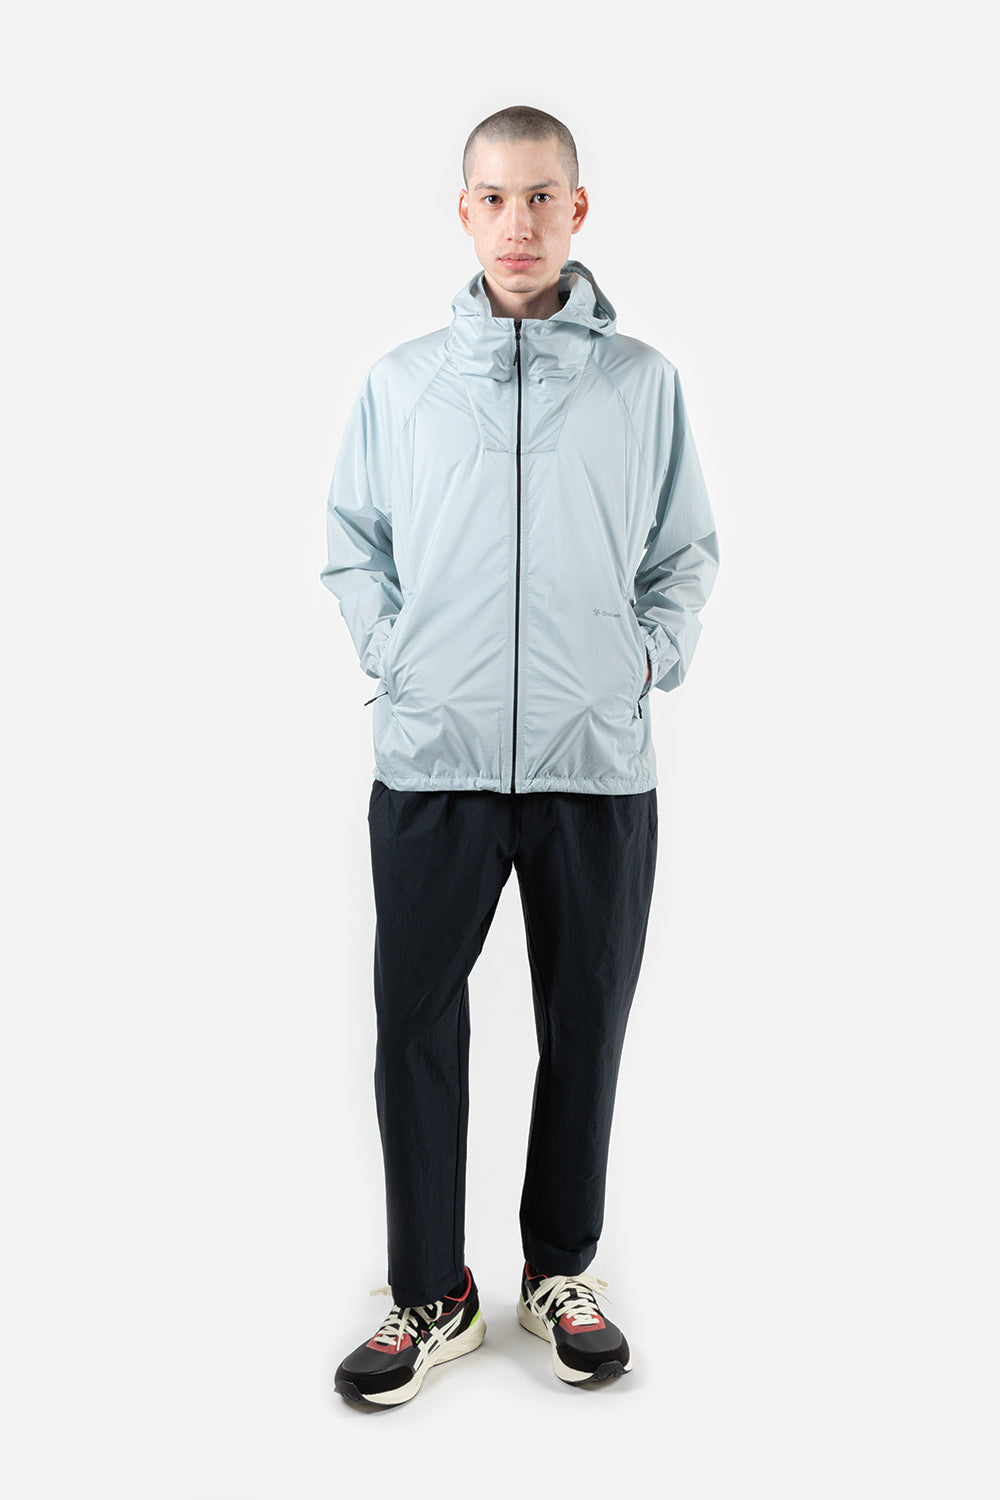 goldwin-versatile-w-cloth-jacket-vapor-gray